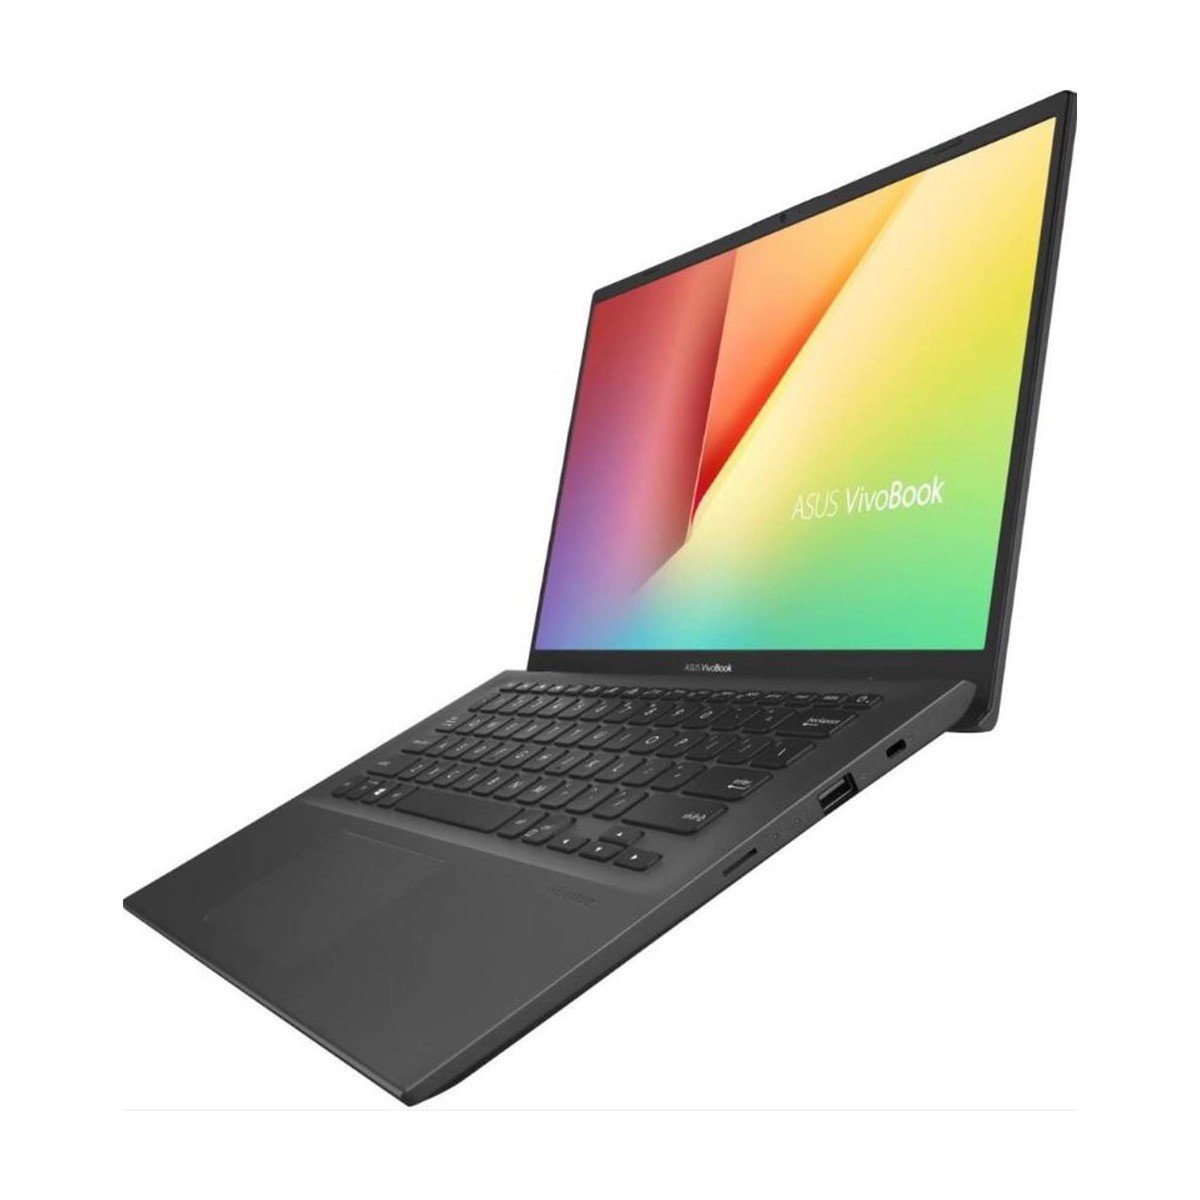 Asus Vivobook 14 A412UA-EK281T Laptop, Slate Grey - Intel i3-7020U 2.30 GHz, 4 GB RAM, 1TB HDD, Intel UHD Shared, 14 Inches LED, Windows 10, Eng-Arb-KB